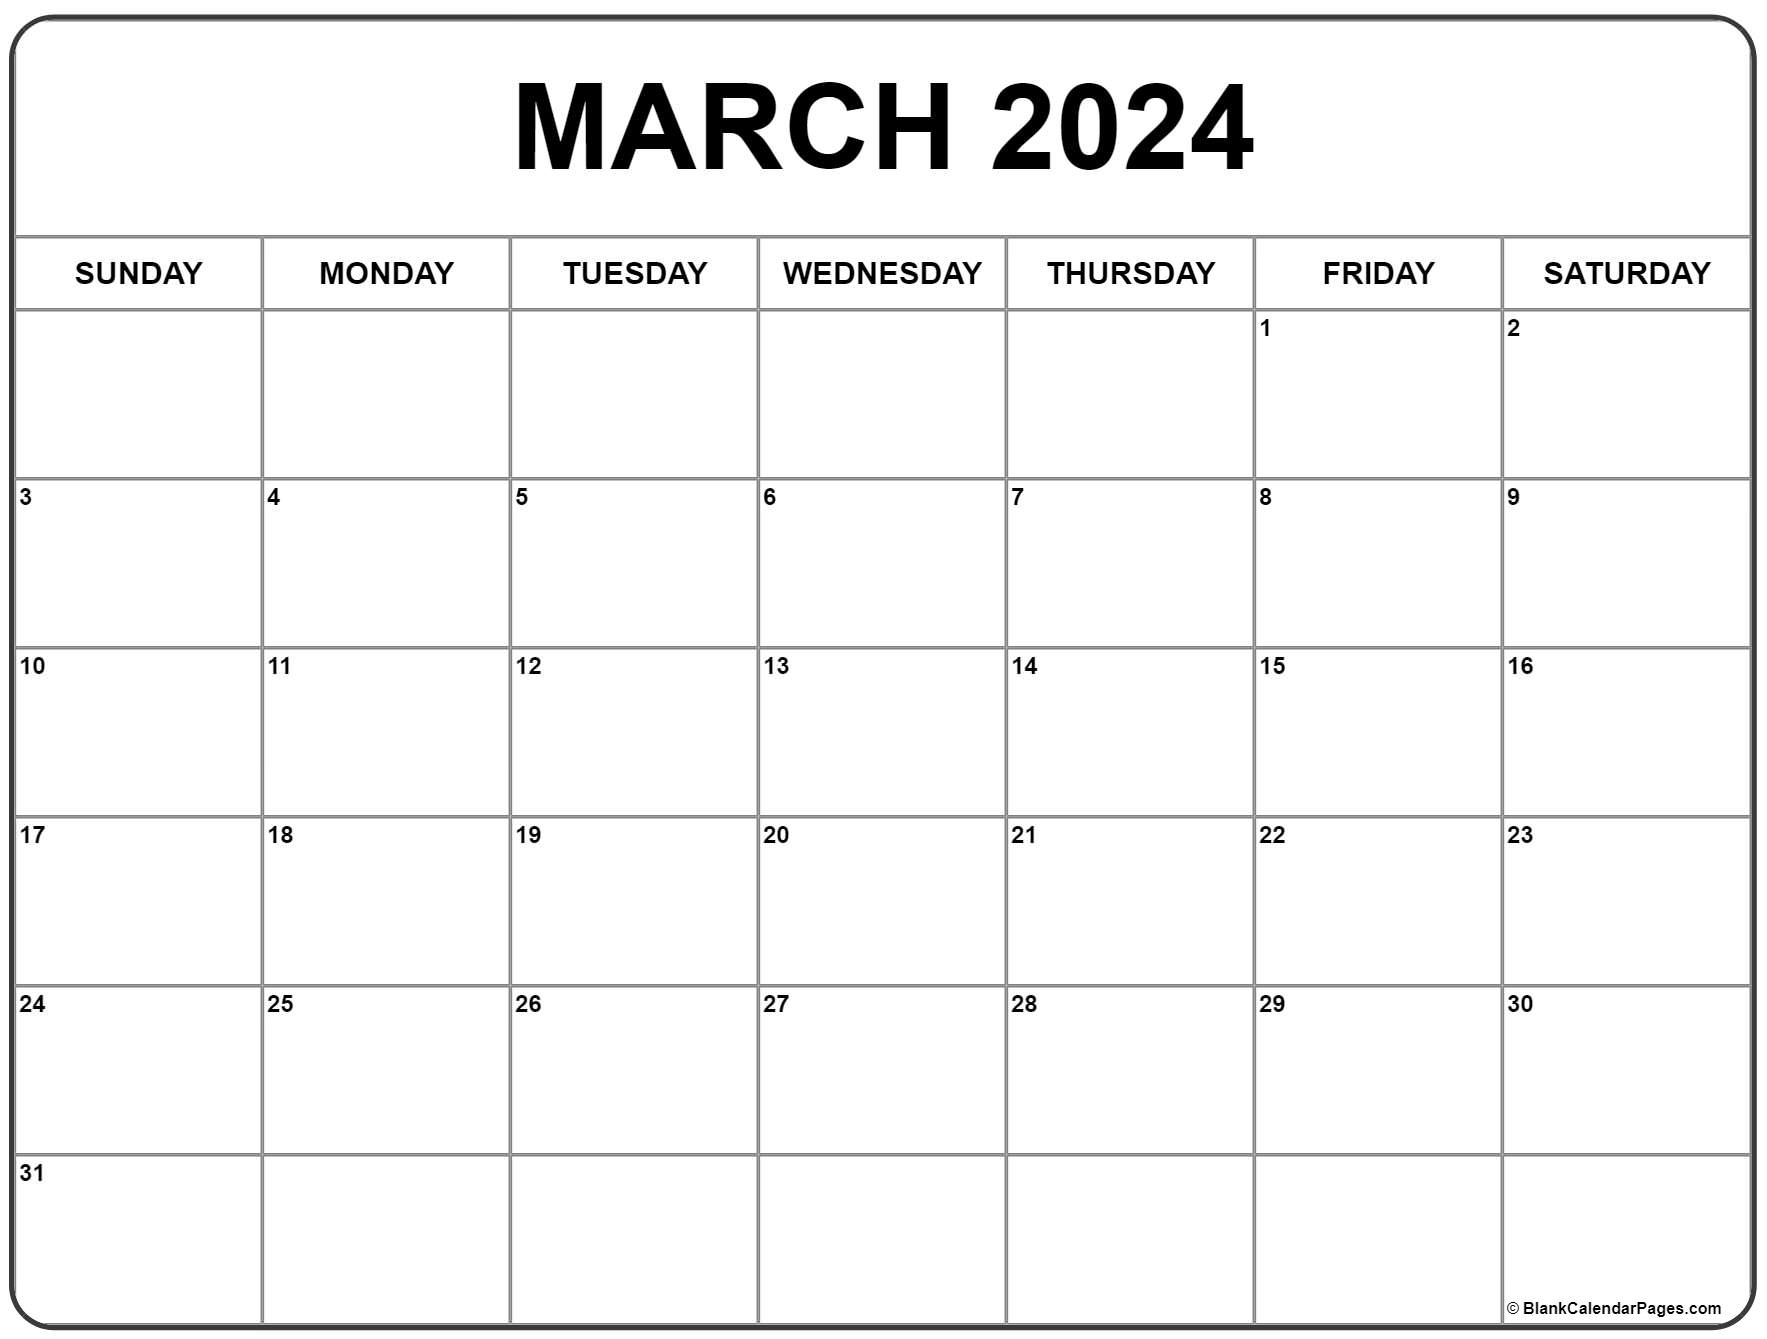 March 2024 Calendar | Free Printable Calendar for Mar 2024 Calendar Printable